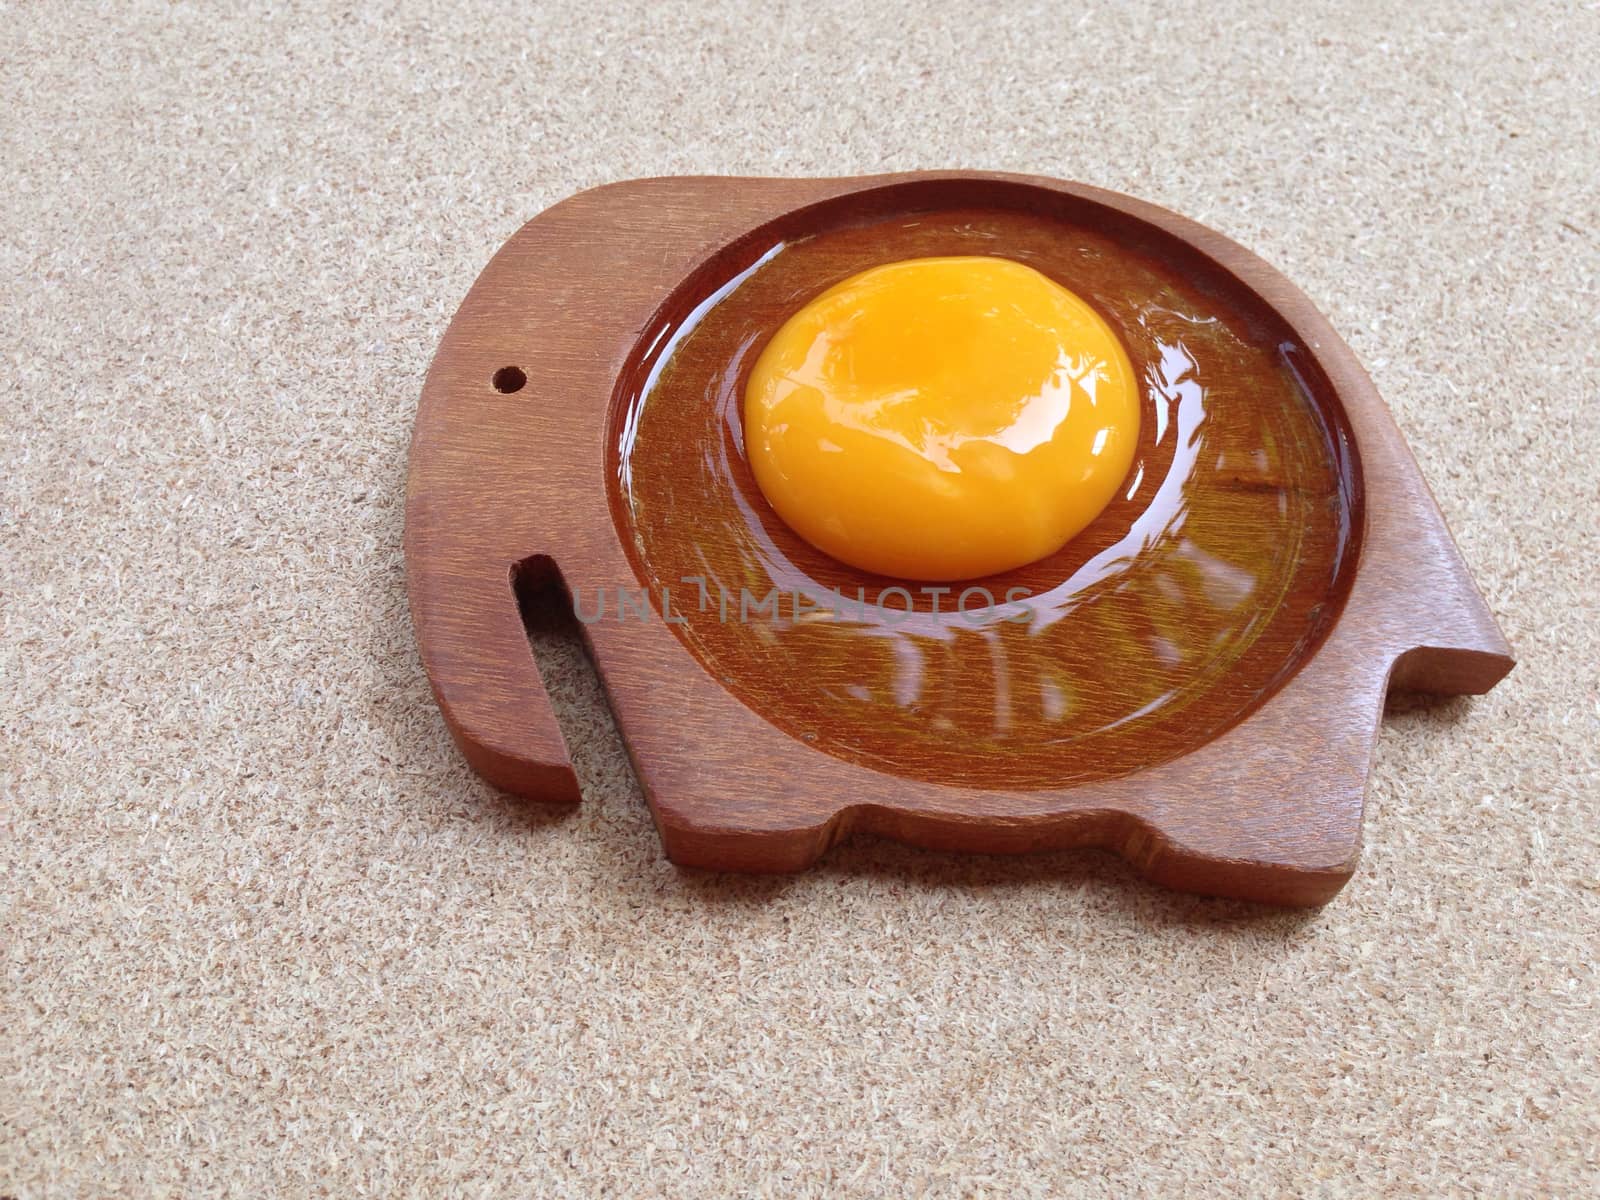 Egg on wooden elephant shaped saucer